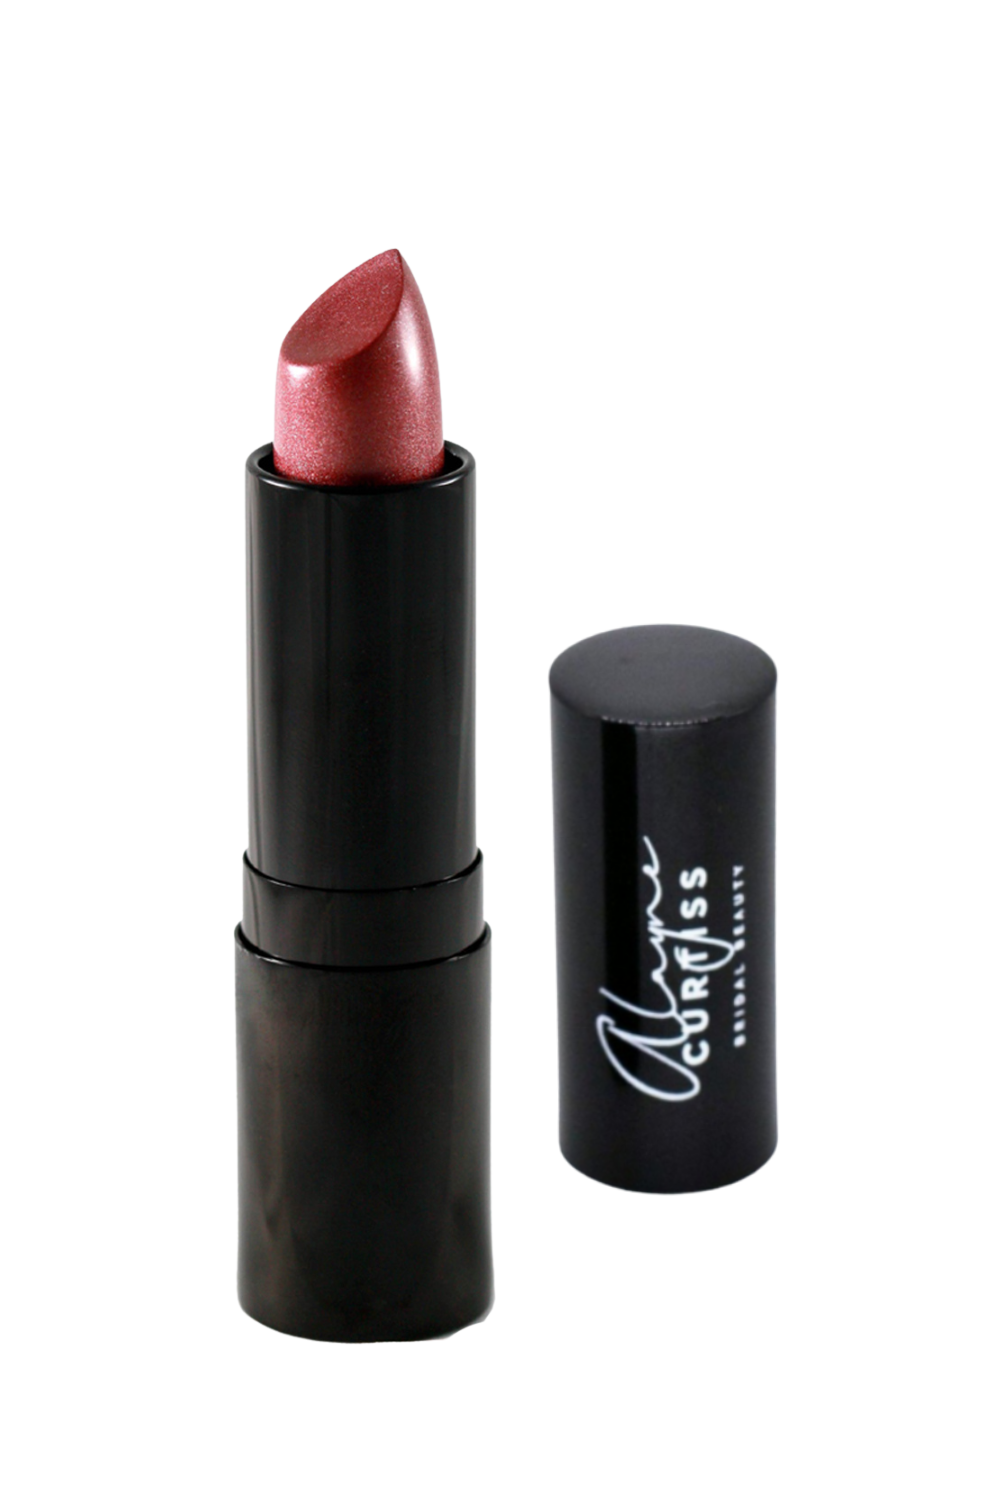 Grand Avenue Satin Shimmer Lipstick